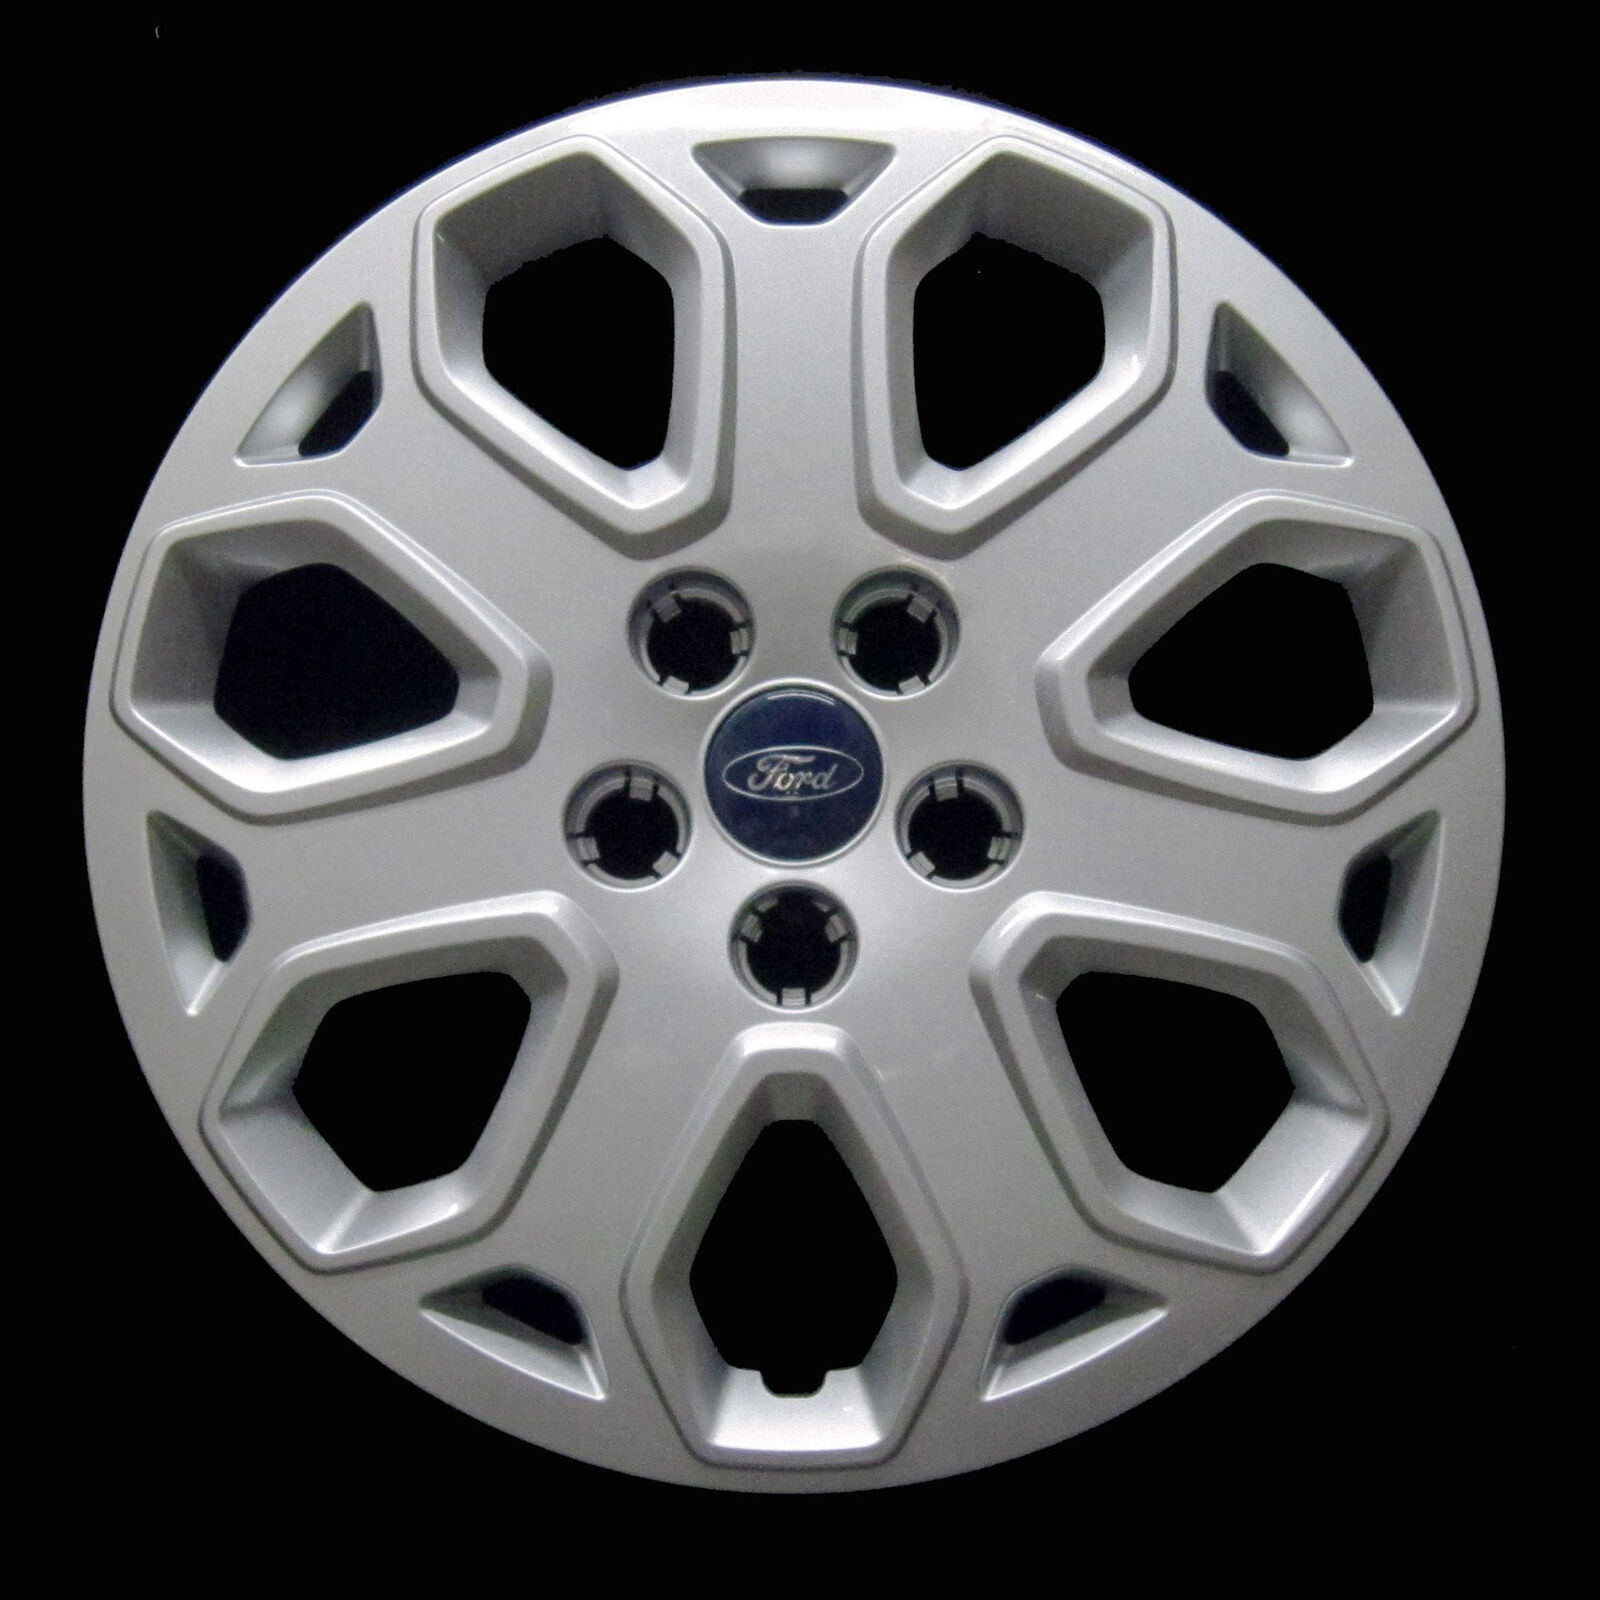 Hubcap for Ford Focus 2012-2014 Genuine Factory Original OEM Wheel Cover 7059